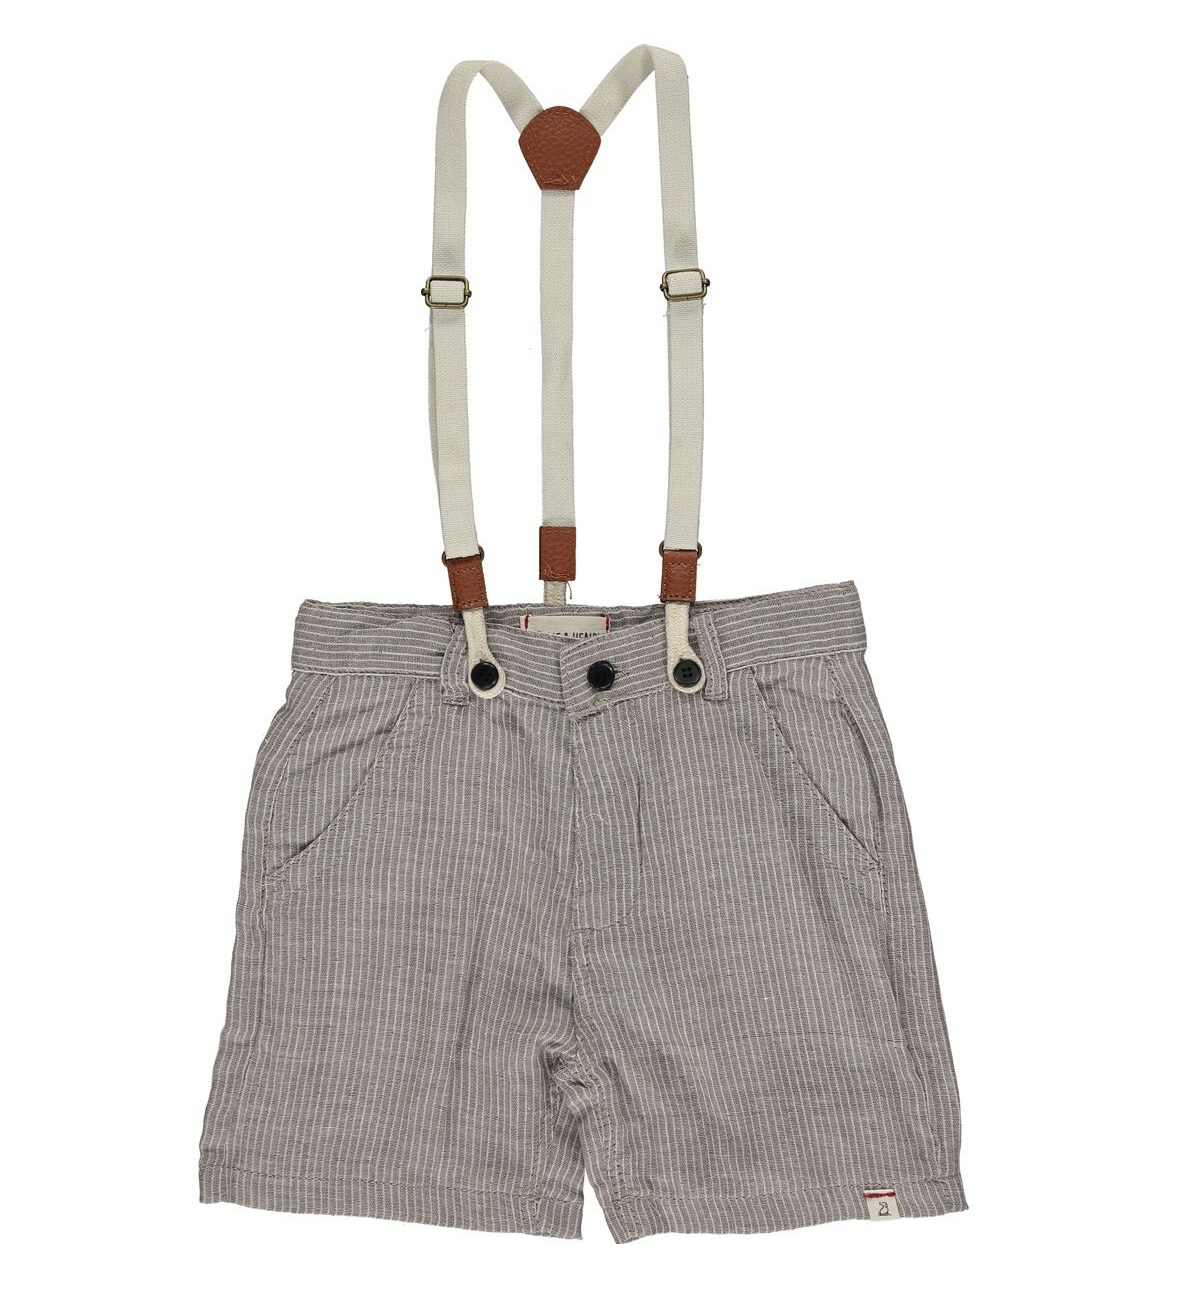 me & henry me & henry shorts/suspenders